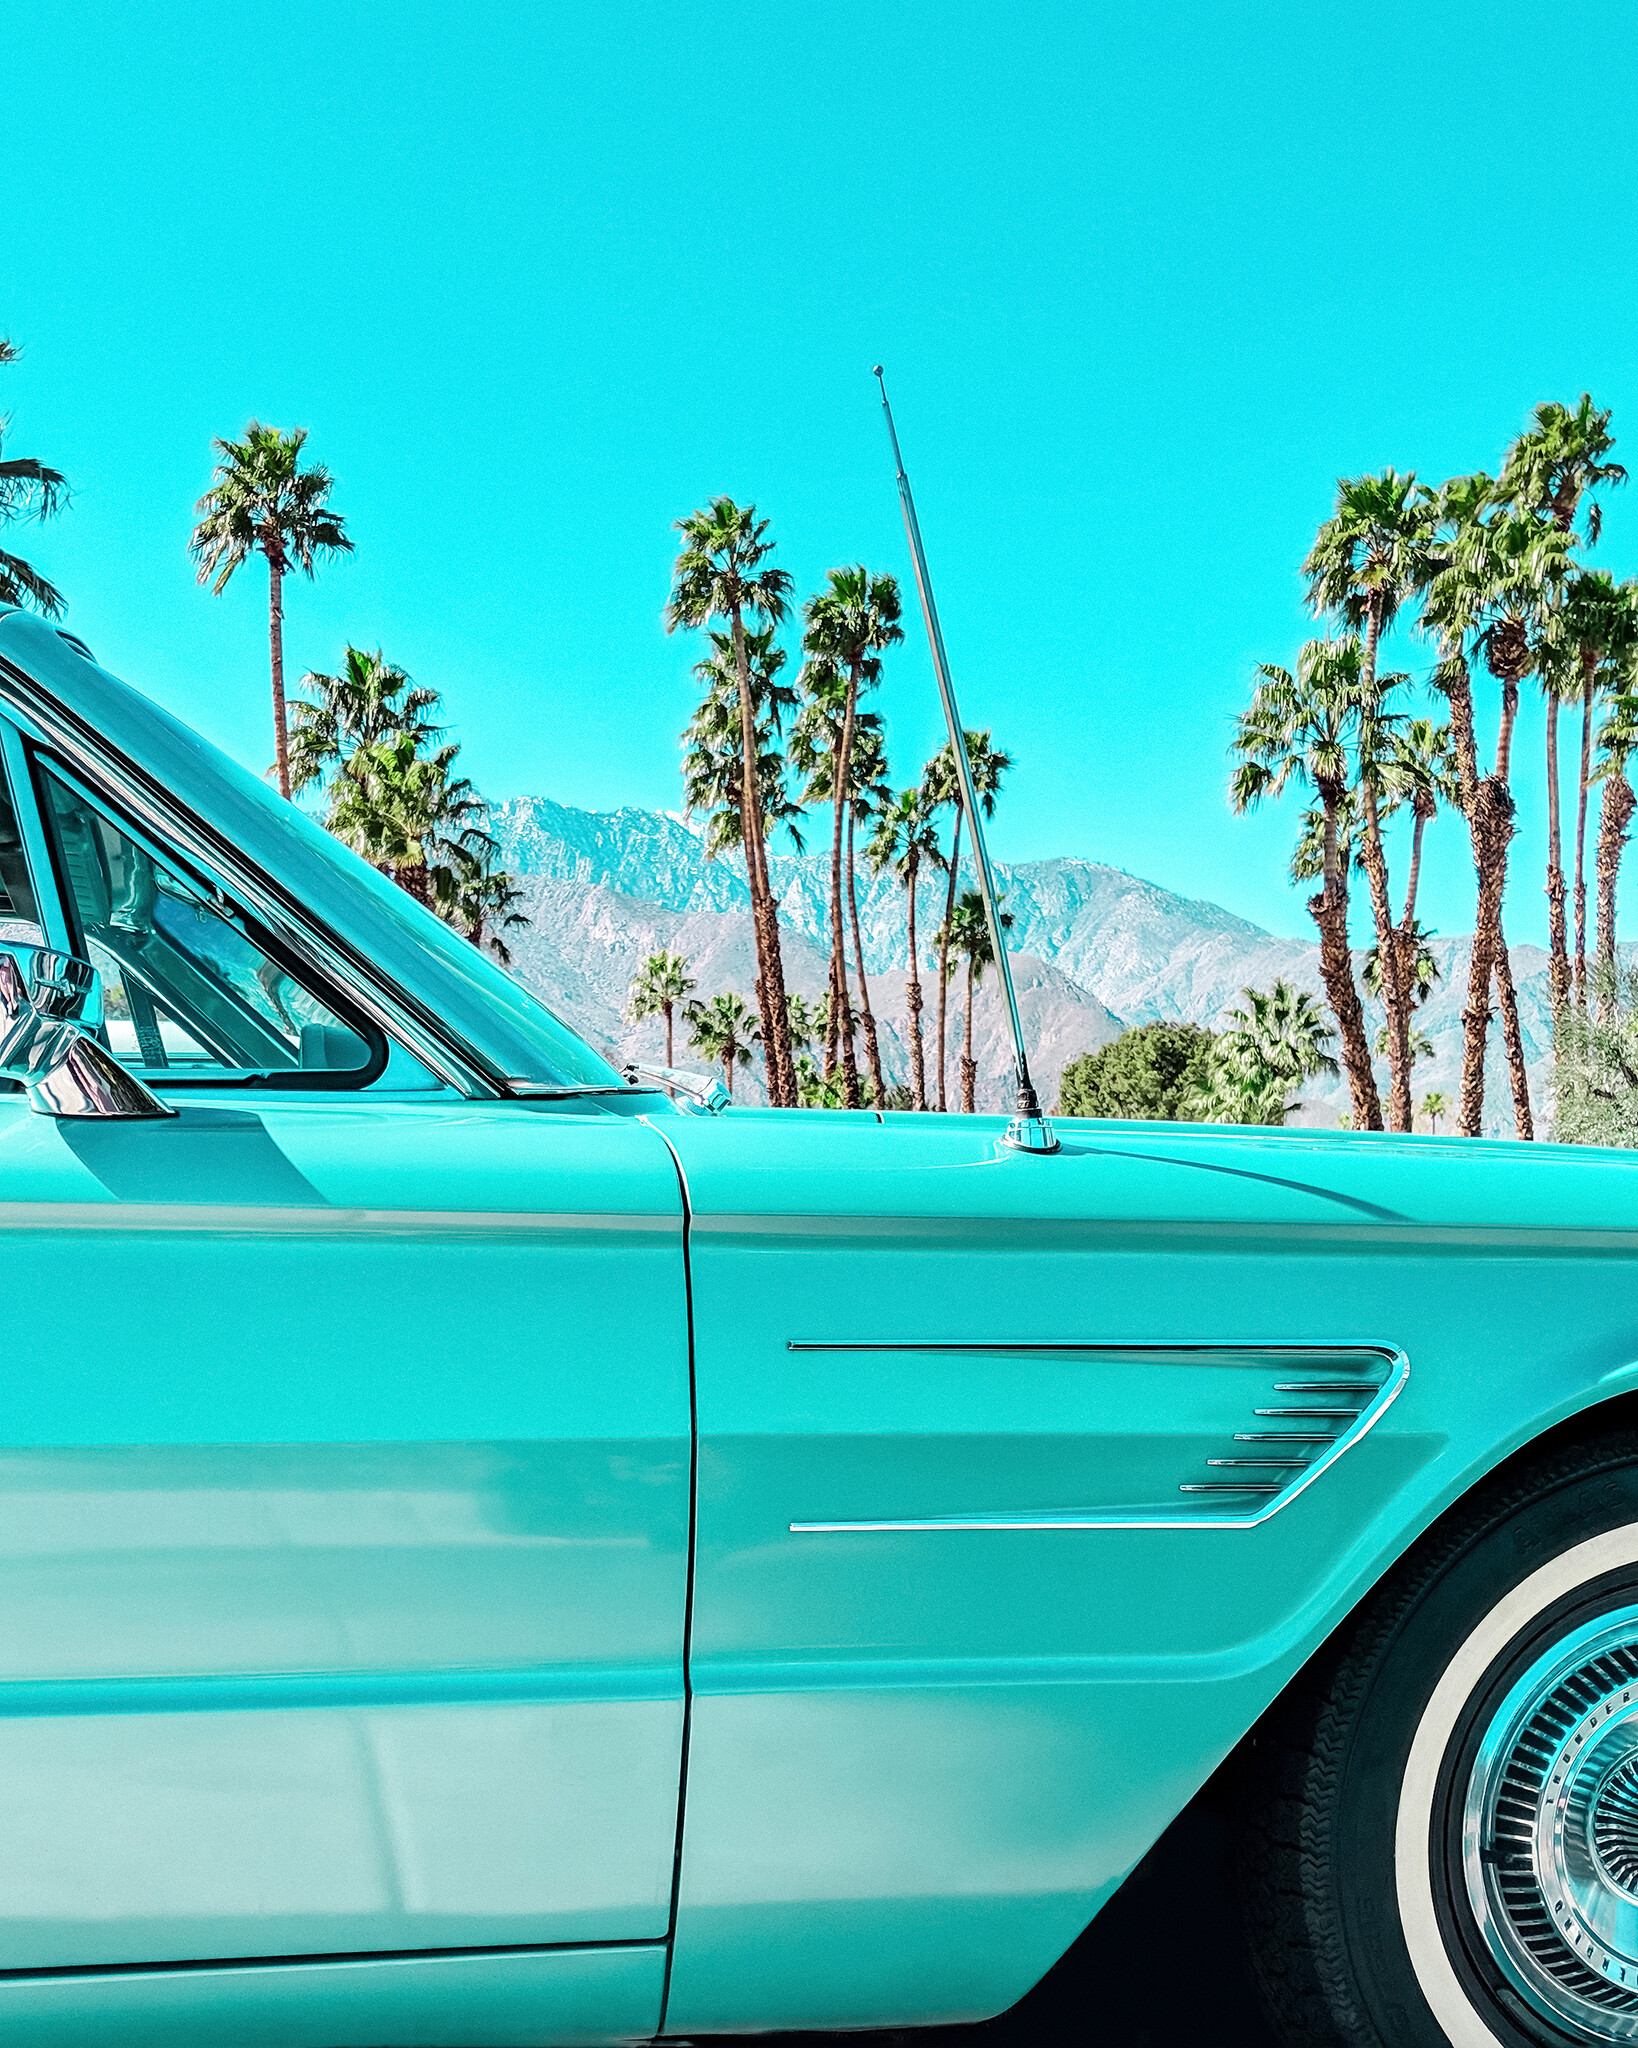 Teal Thunderbird in Palm Springs